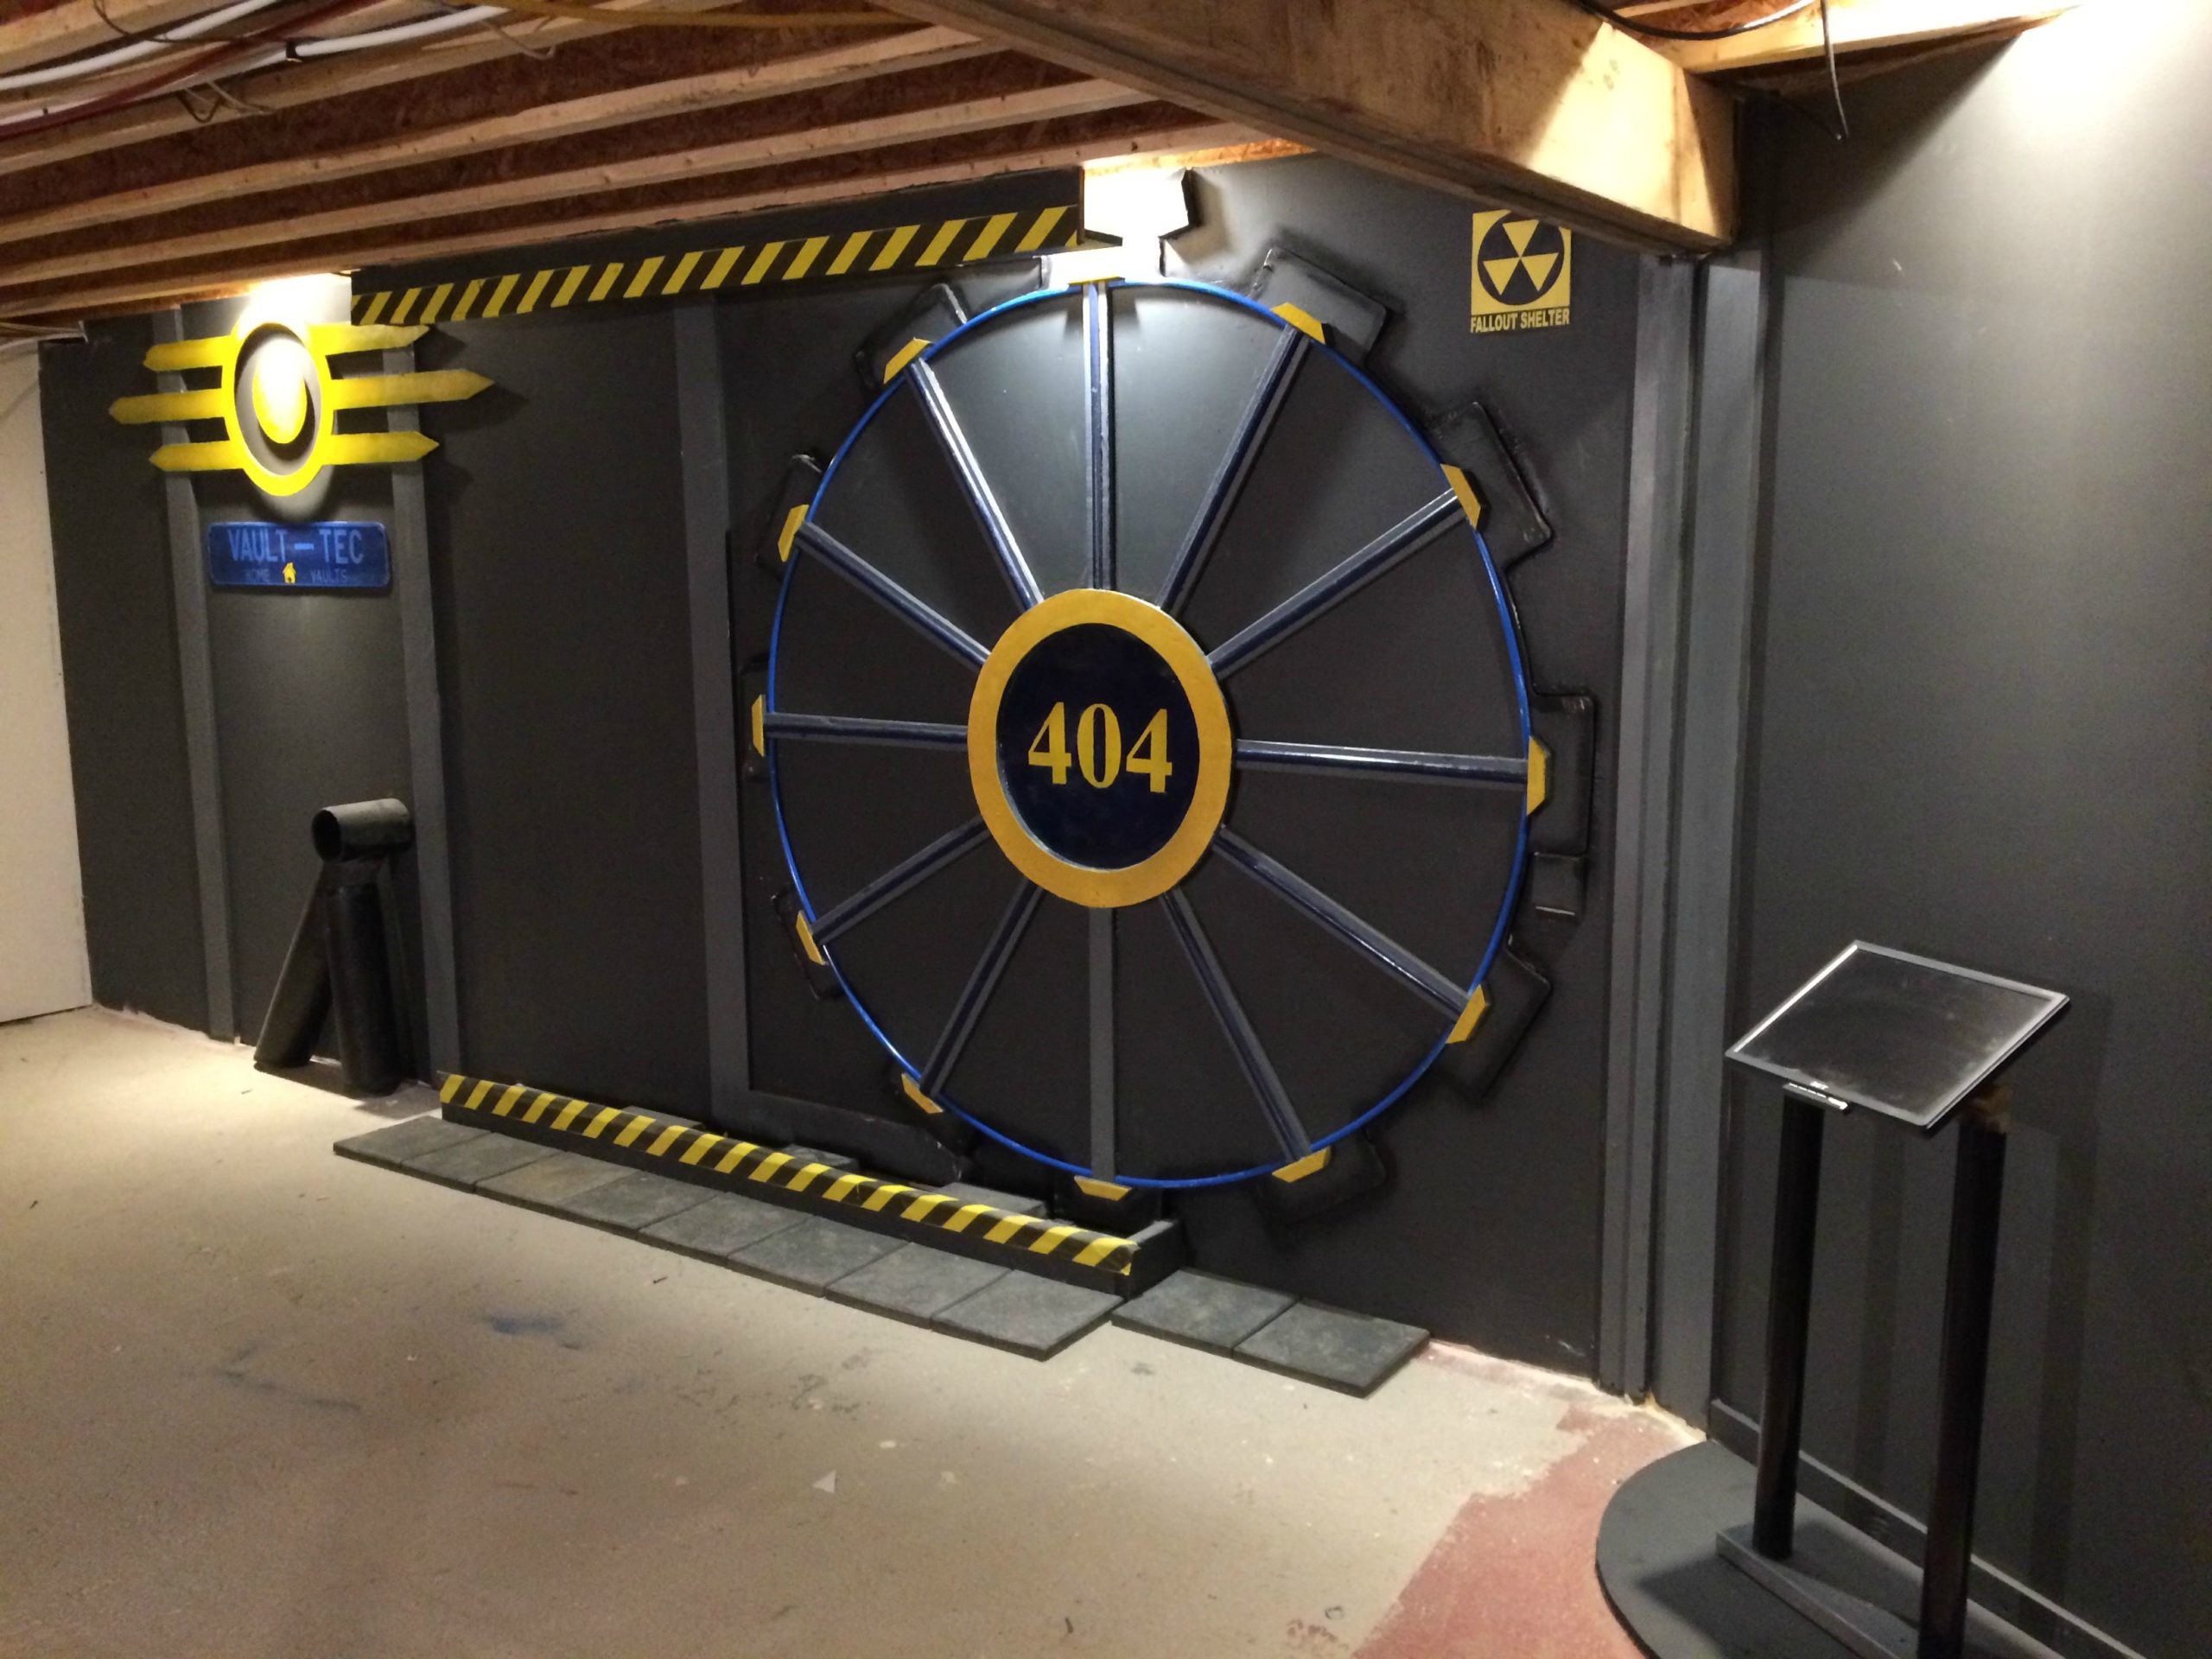 Guy Builds Gaming Room With Fallout Vault-Tec Door